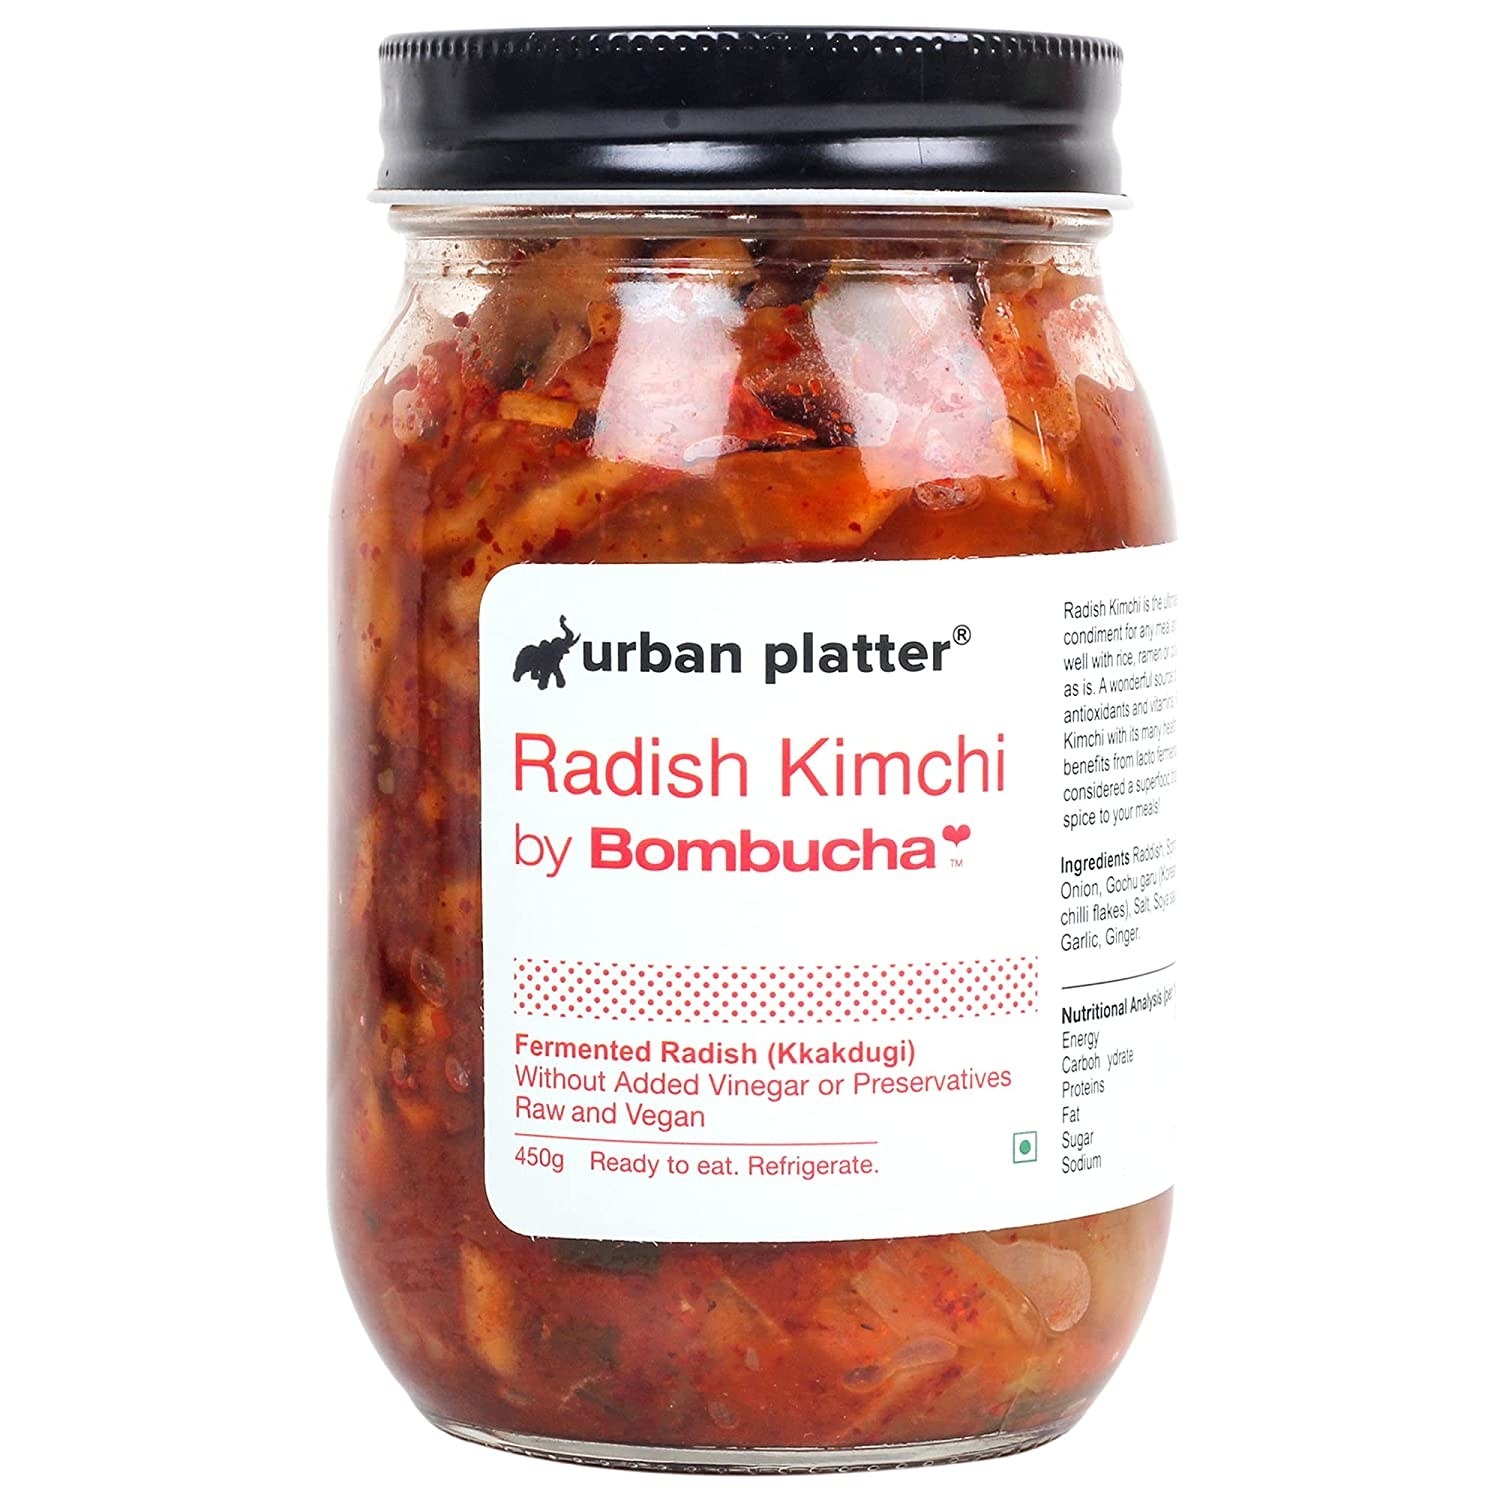 A jar of fermented radish kimchi.